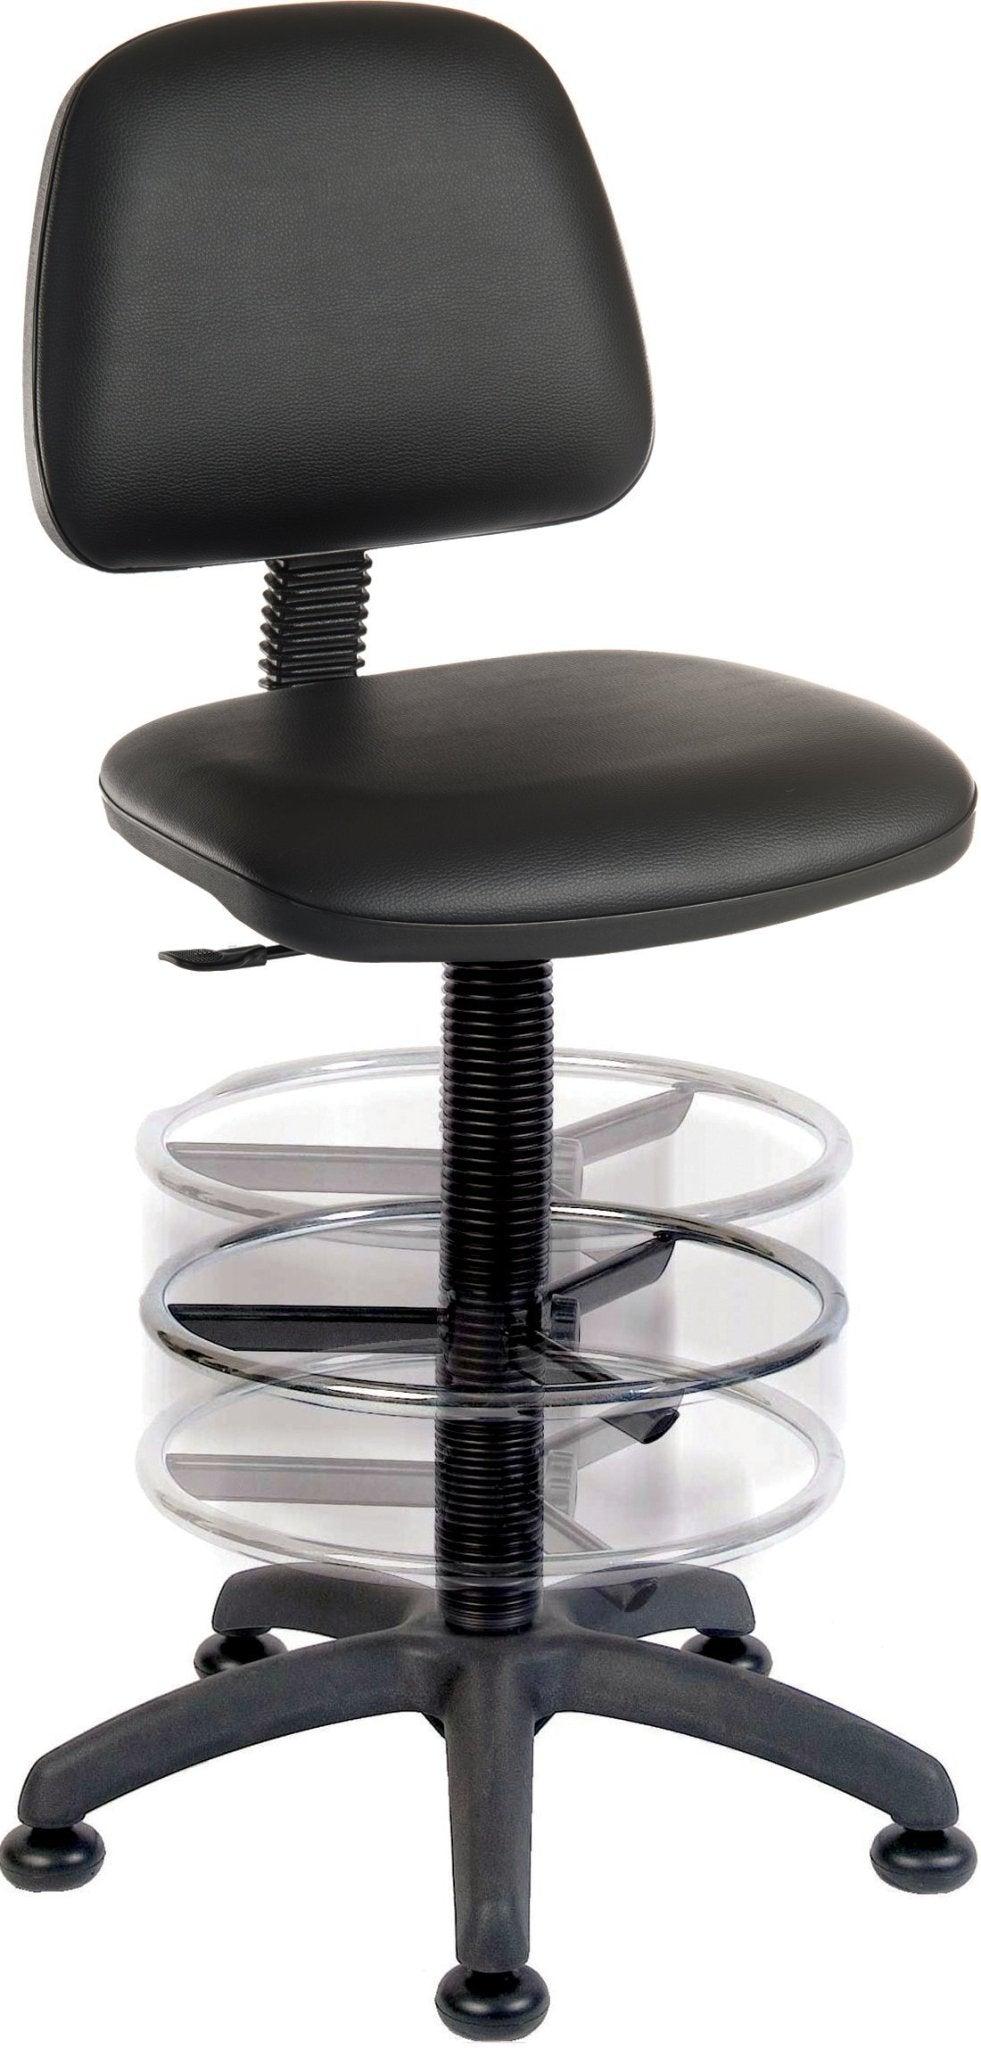 Deluxe draughter ergo blaster office chair (black) - crimblefest furniture - image 1